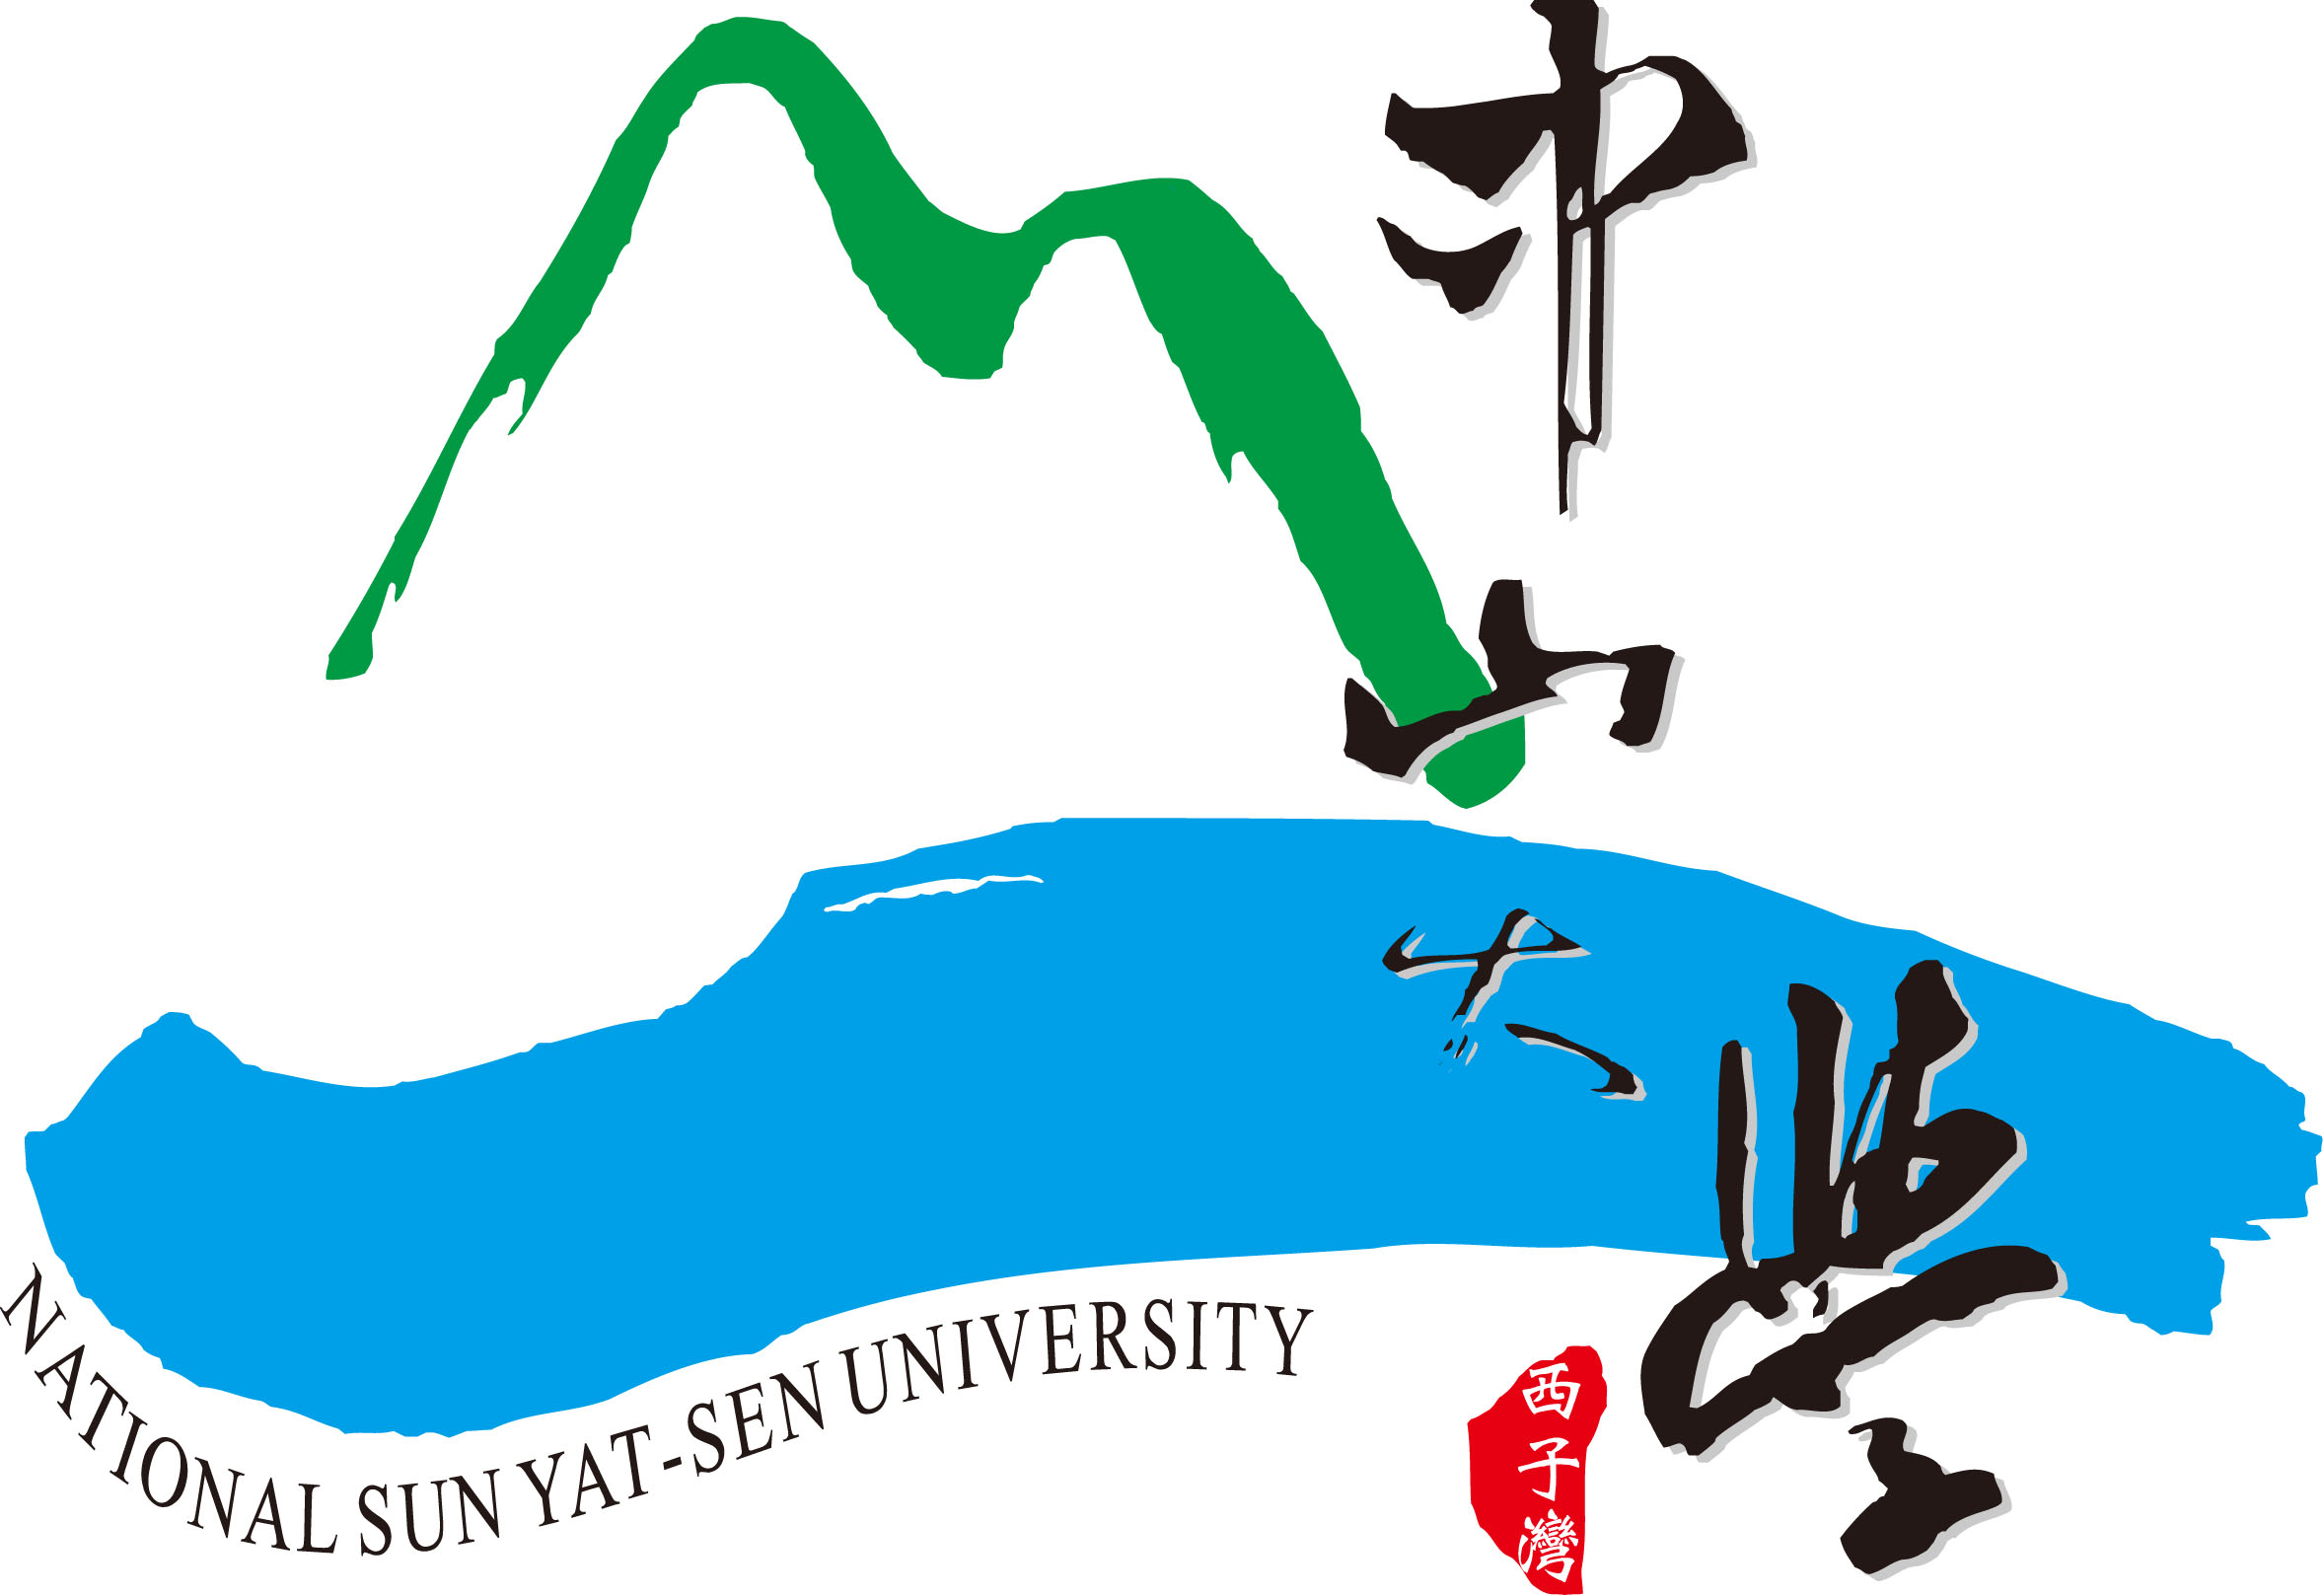 National Sun Yat-sen University